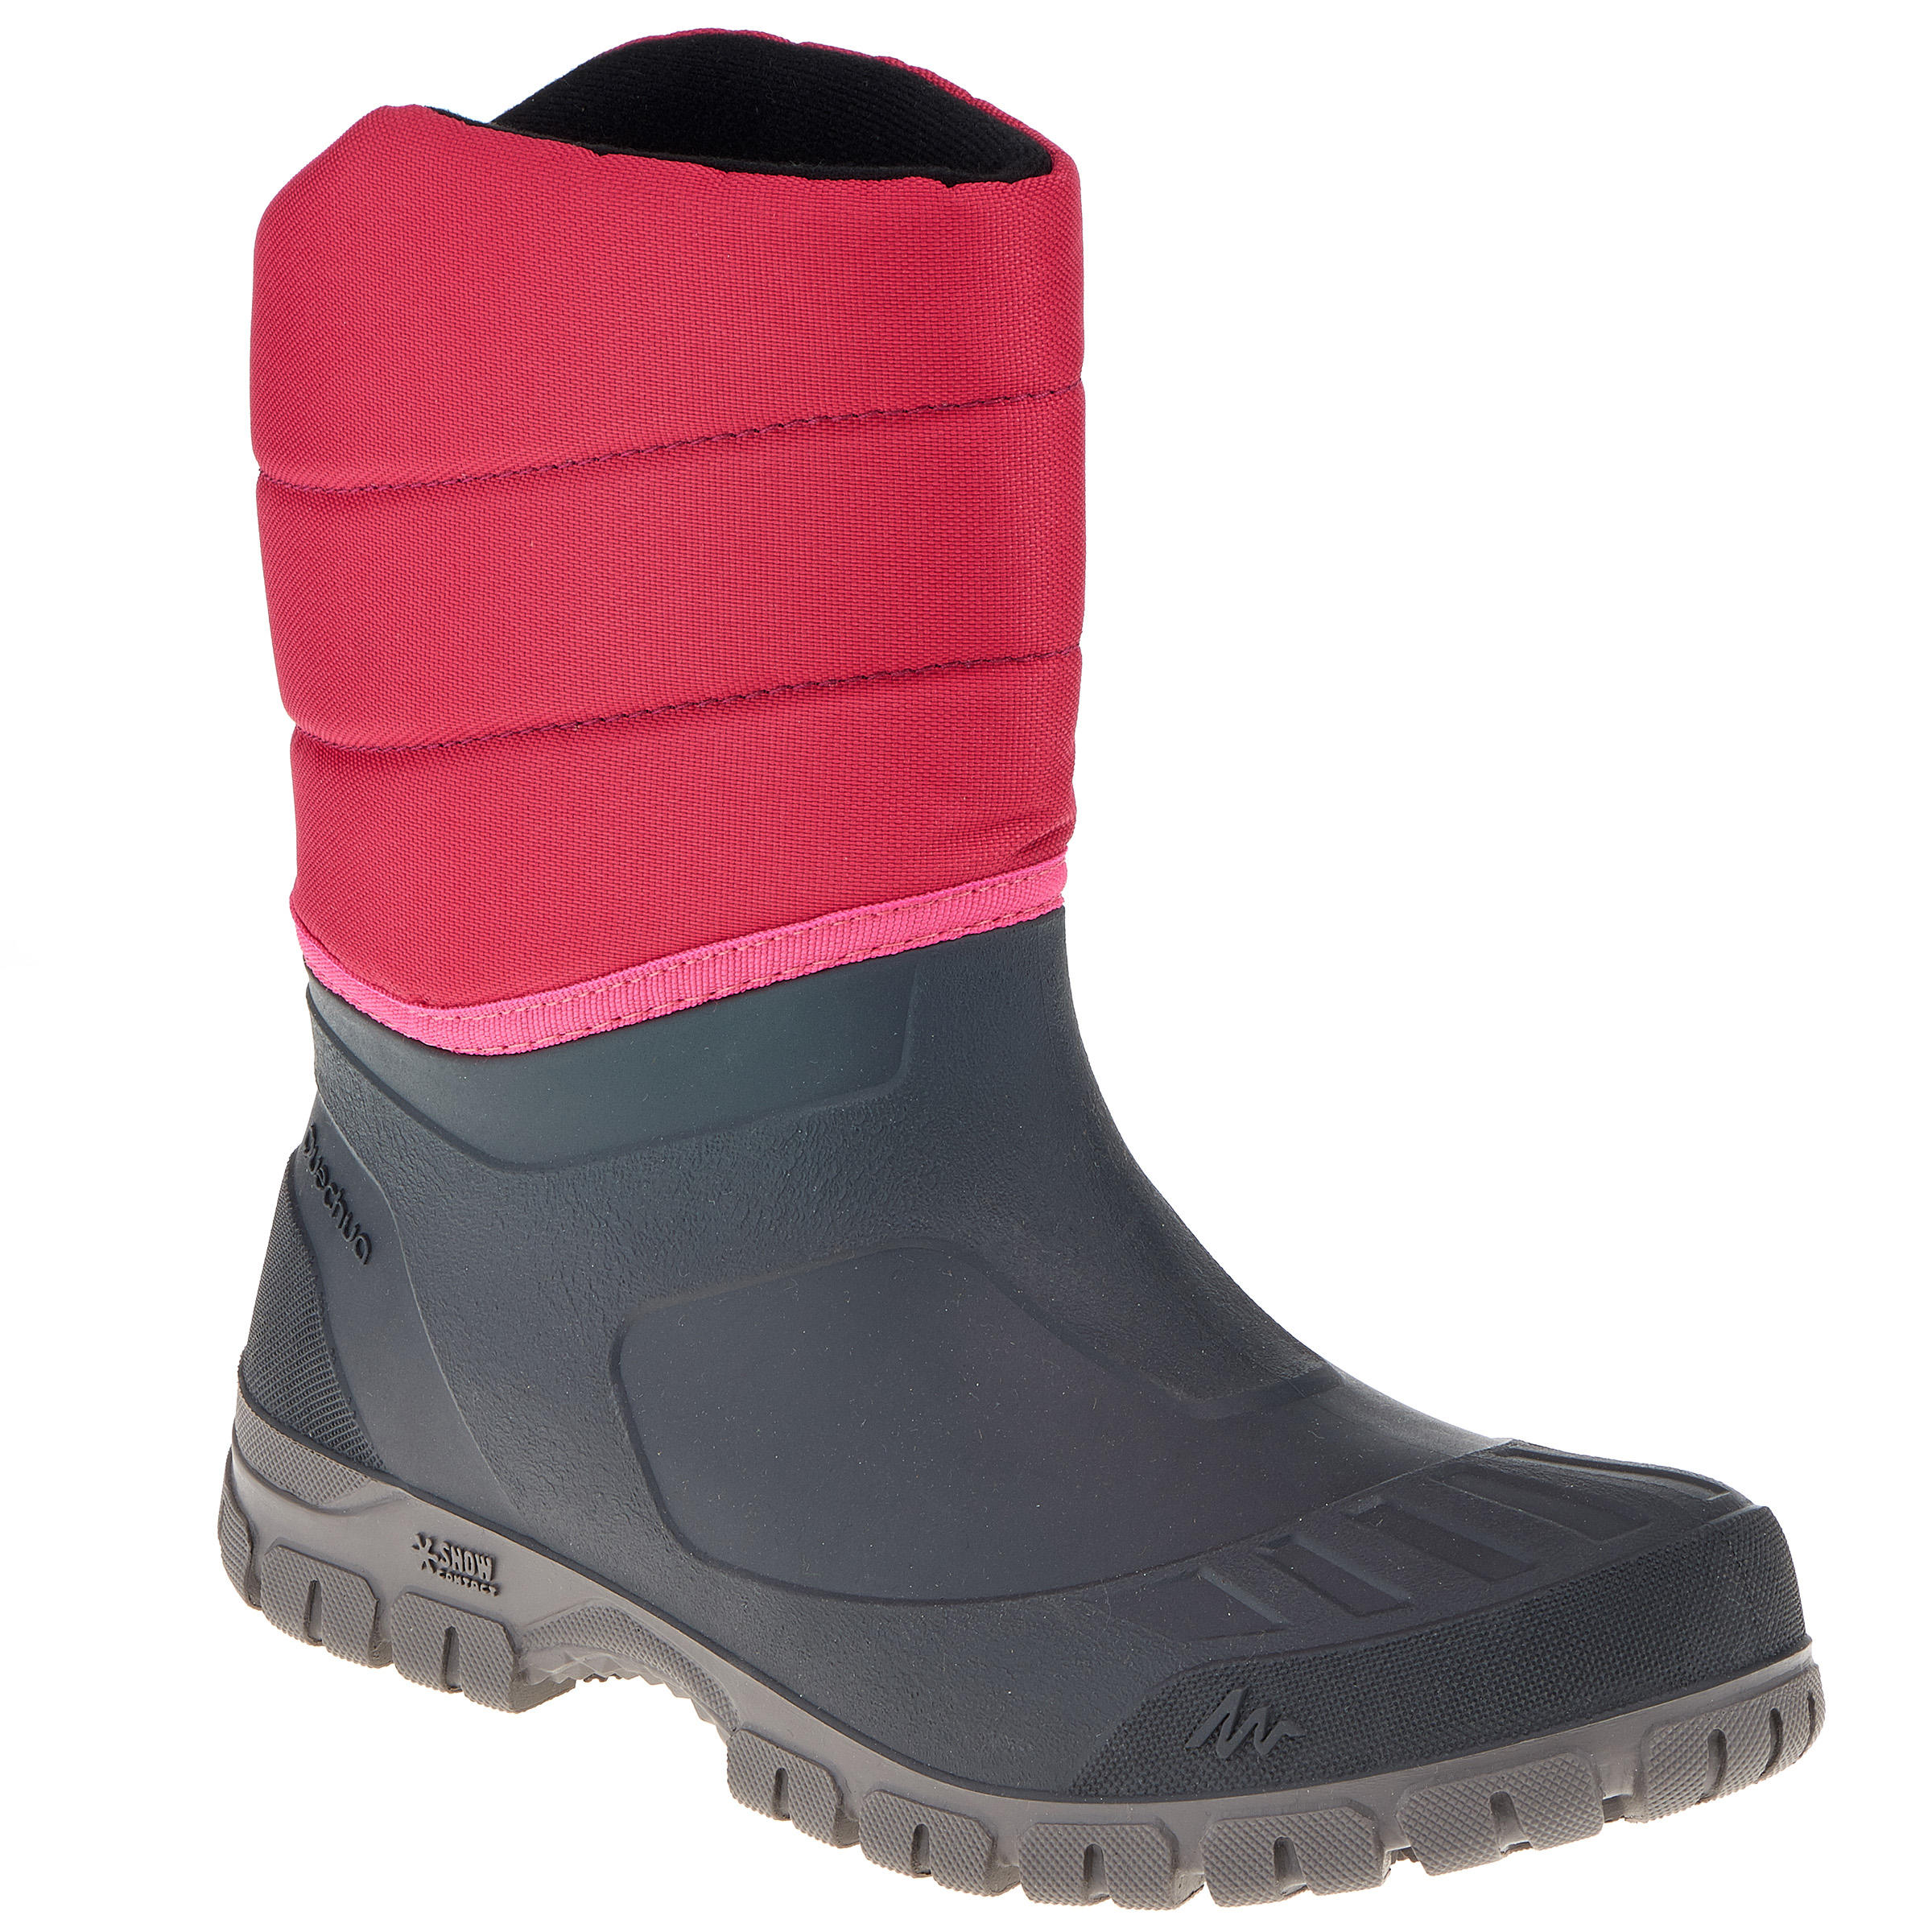 QUECHUA Arpenaz 50 Warm Waterproof Women's Hiking Boots Pink